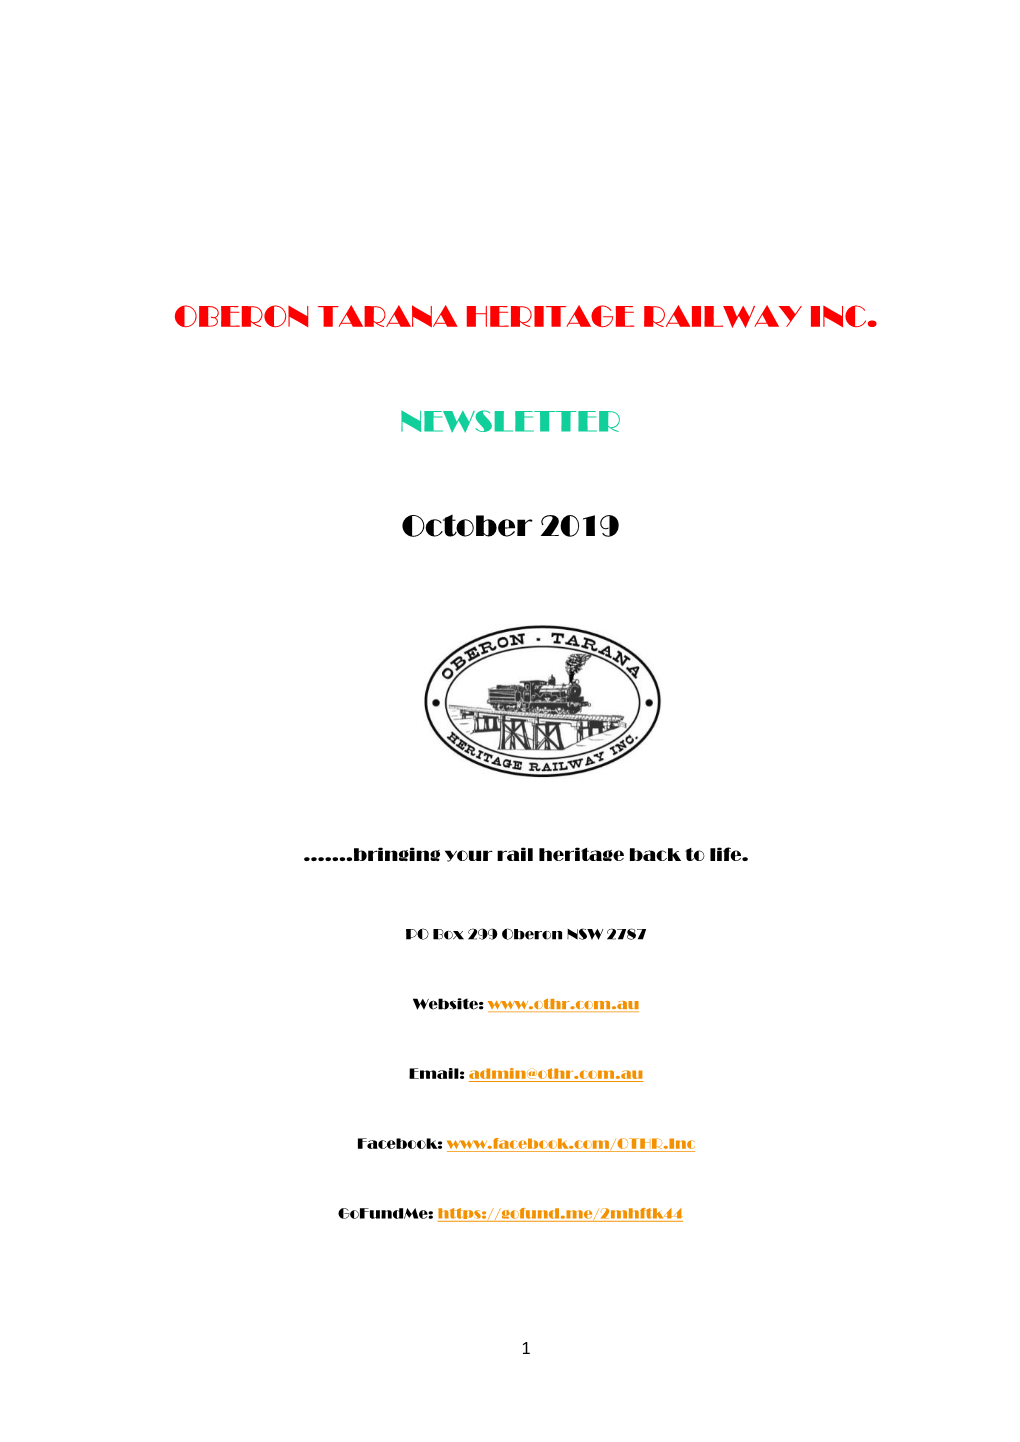 Oberon Tarana Heritage Railway Inc. Newsletter